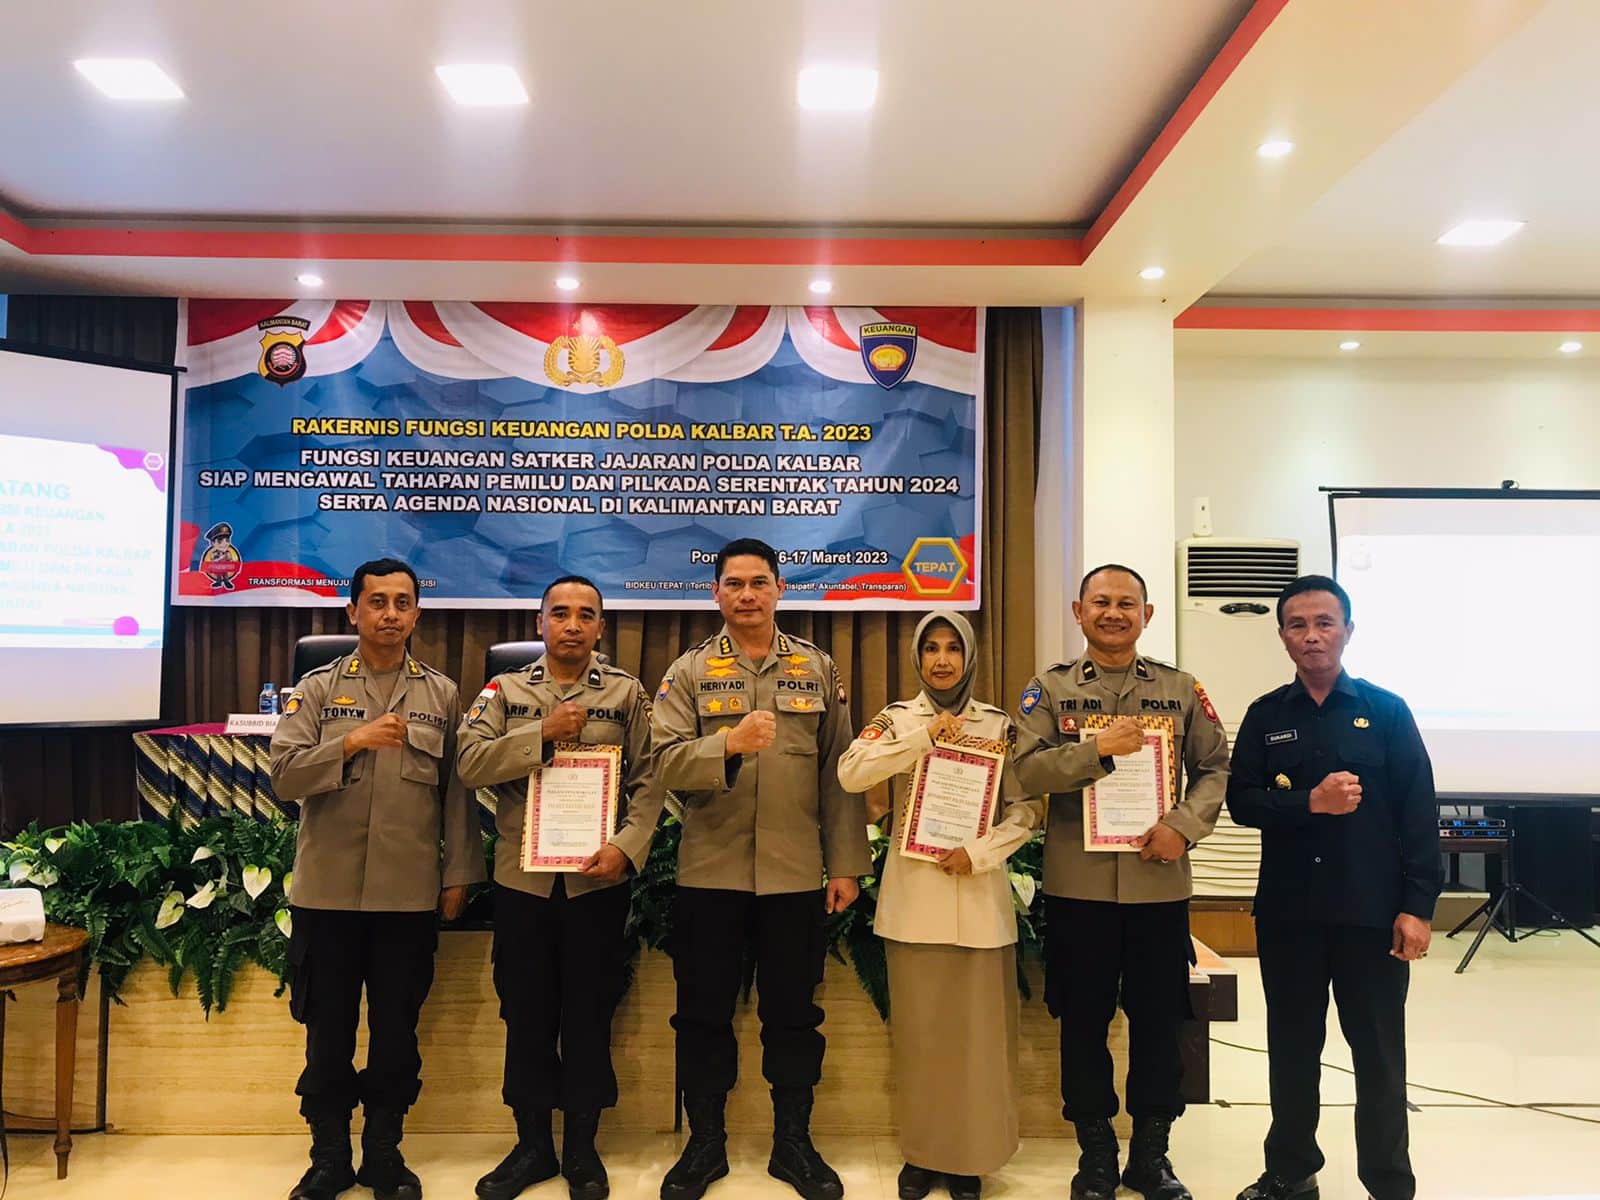 Jajaran Polres Kapuas Hulu berfoto bersama usai mendapatkan penghargaan dari Kapolda Kalbar untuk peringkat pertama dalam Indikator Kinerja Pelaksanaan Anggaran (IKPA) tahun 2022. (Foto: Ishaq)